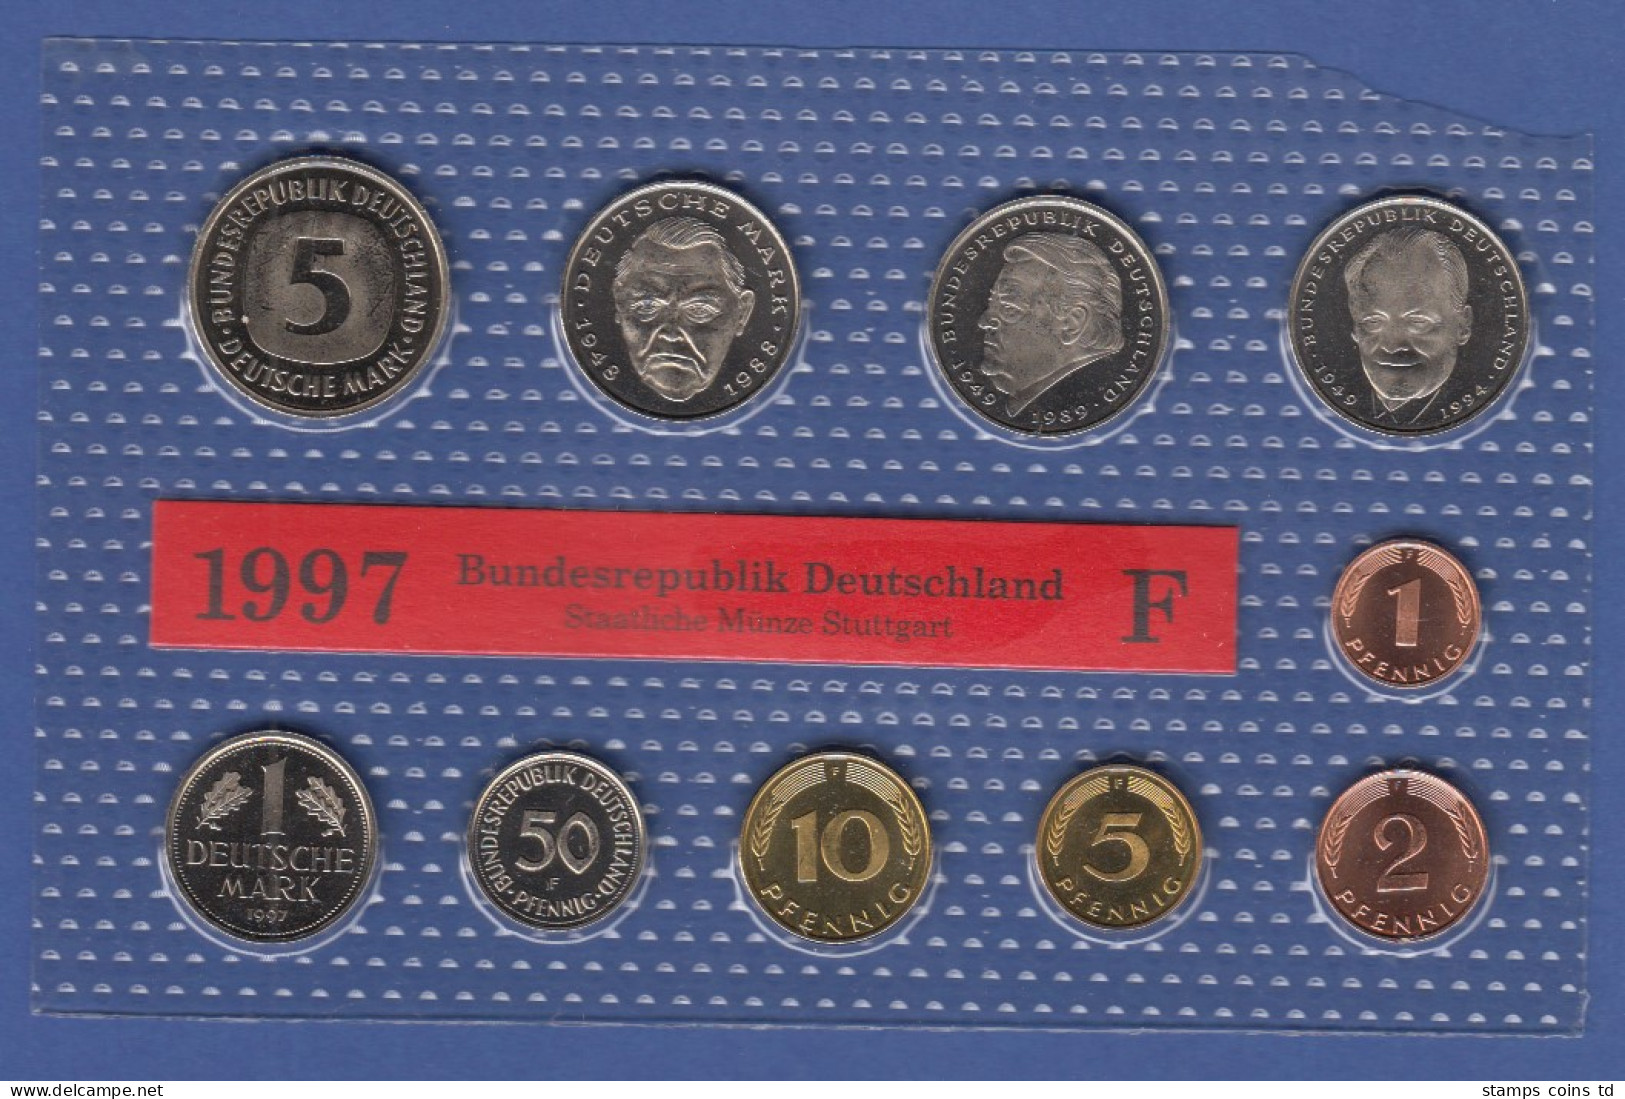 Bundesrepublik DM-Kursmünzensatz 1997 F Stempelglanz - Ongebruikte Sets & Proefsets